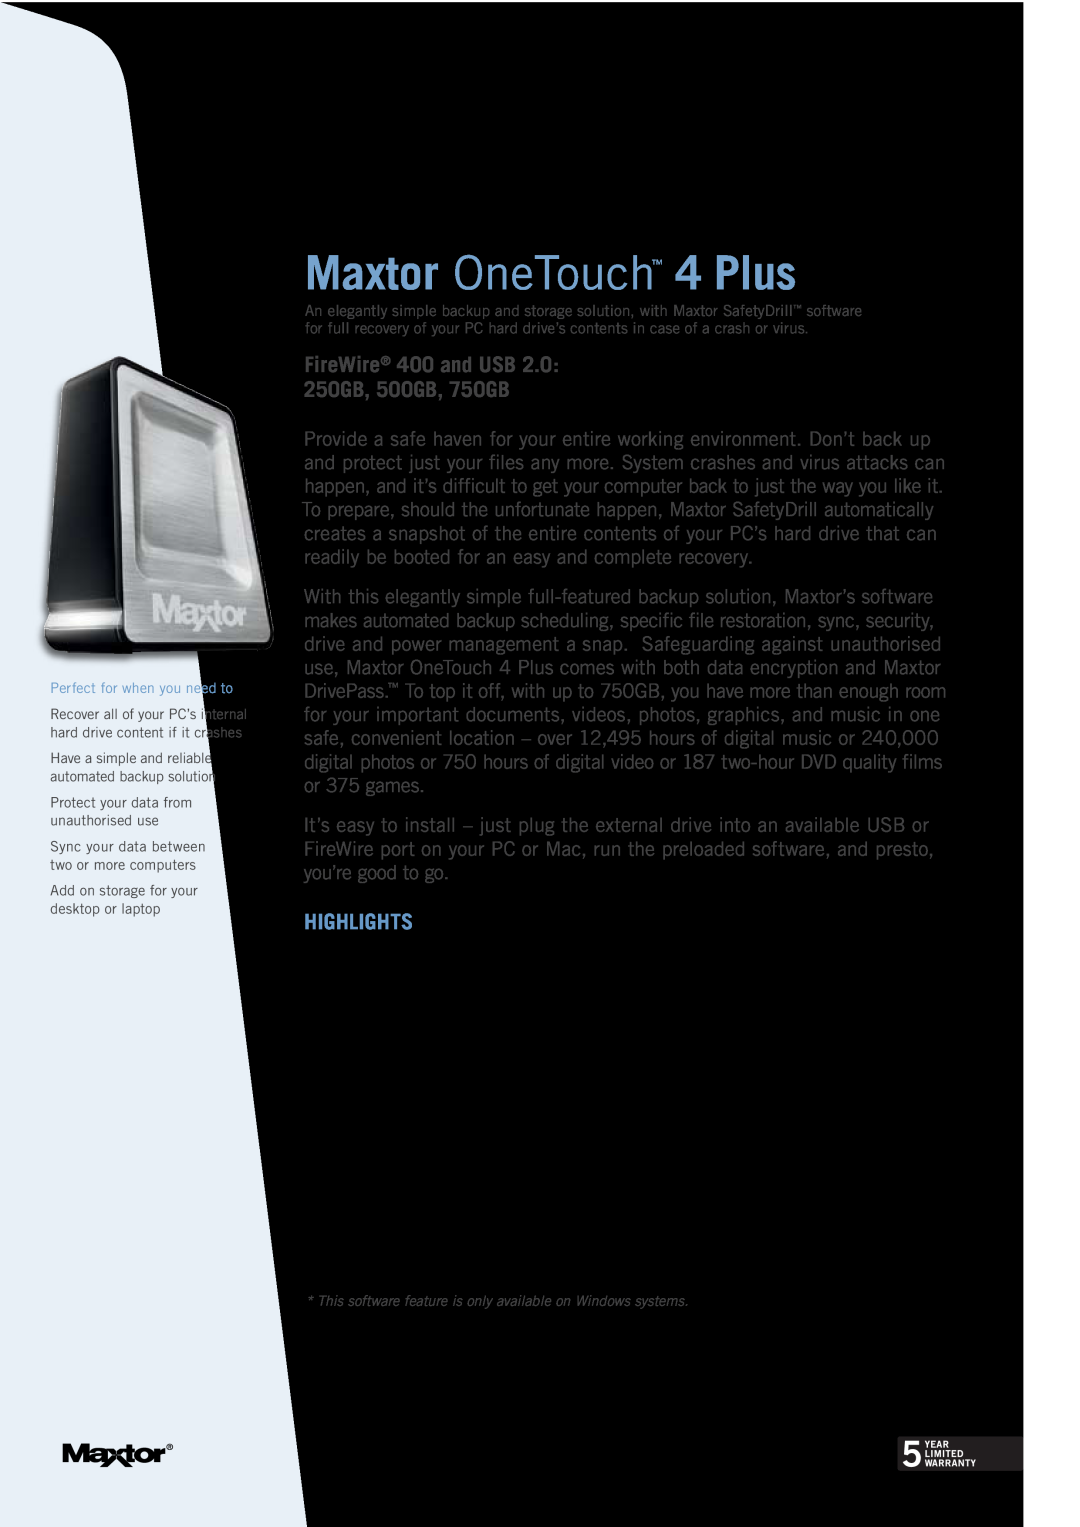 Maxtor STM302504OTD3E5-RK manual Maxtor OneTouch 4 Plus, Highlights, FireWire 400 and USB 2.0 250GB, 500GB, 750GB 